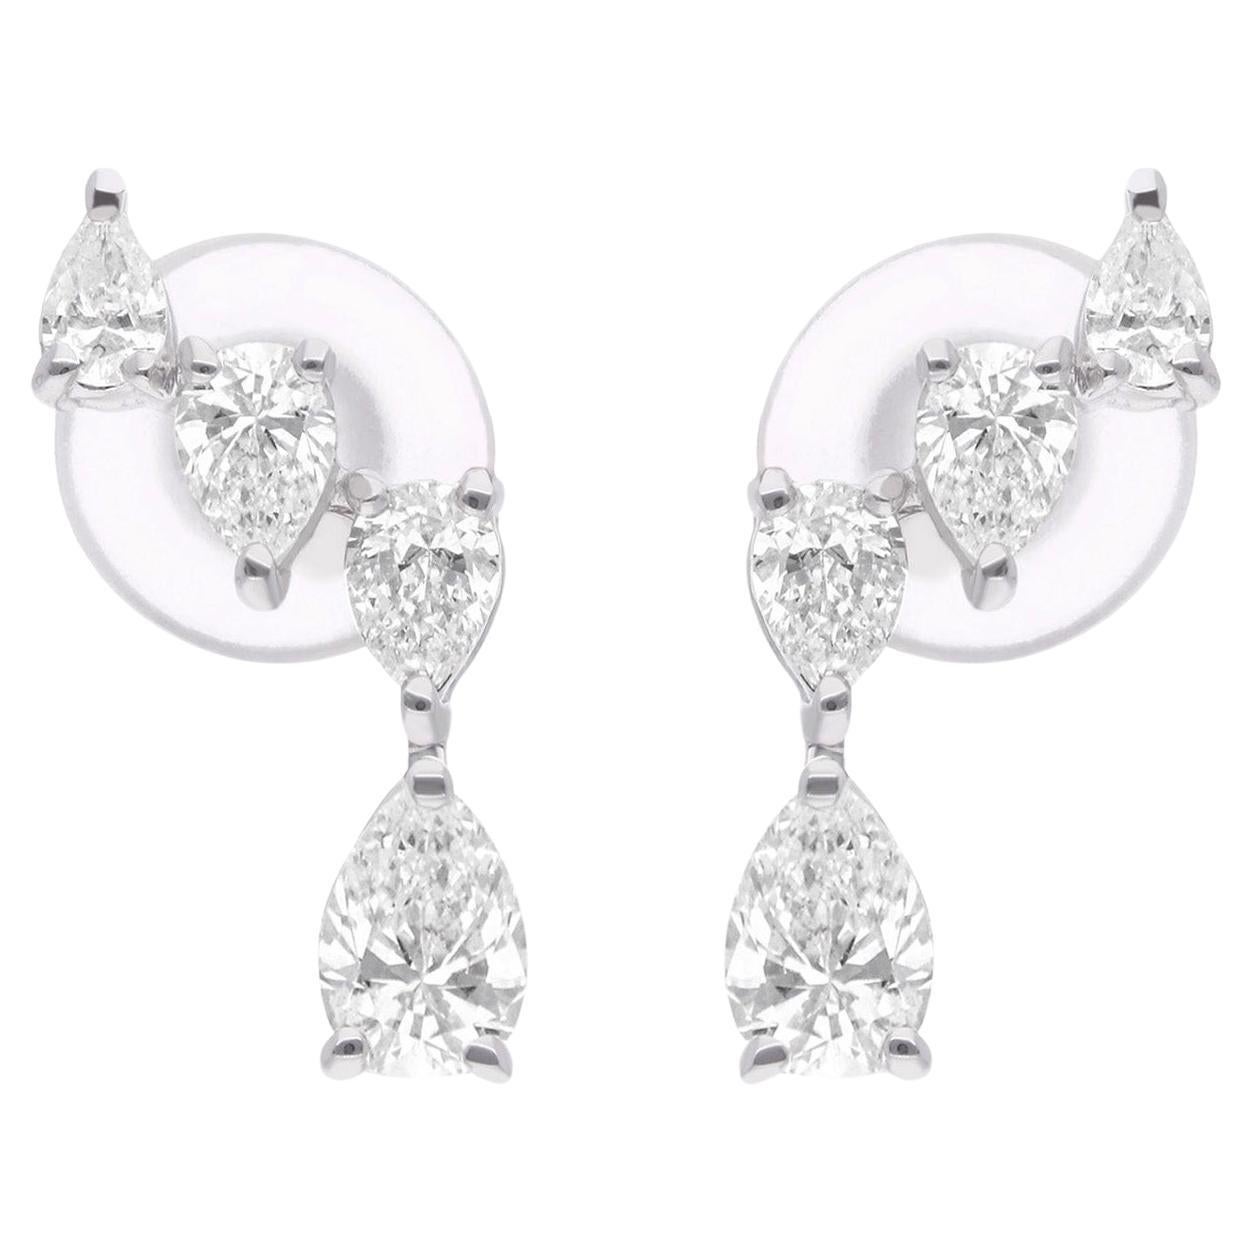 SI Clarity HI Color Pear Shape Diamond Earrings 18 Karat White Gold Fine Jewelry